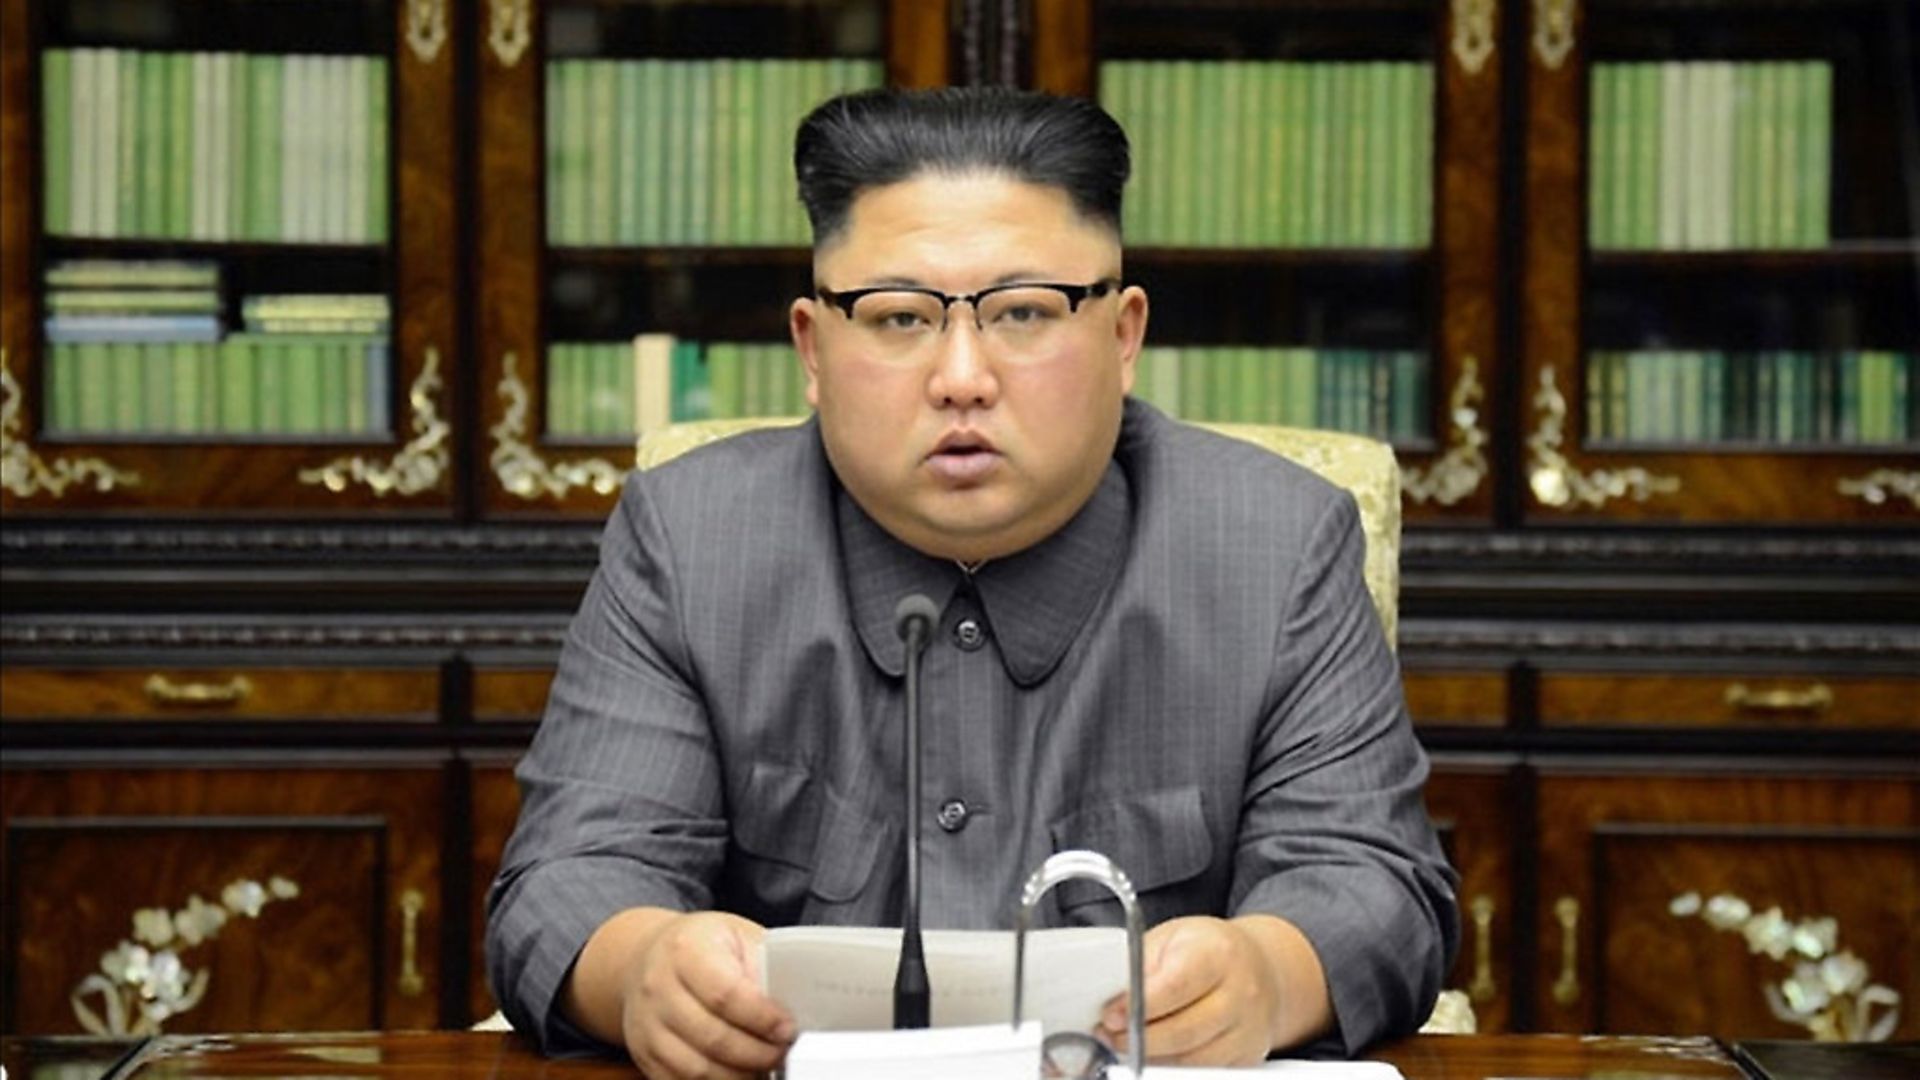 North Korea leader Kim Jong-Un. Photograph: Yonhap News Agency/PA Images. - Credit: Yonhap News Agency/PA Images